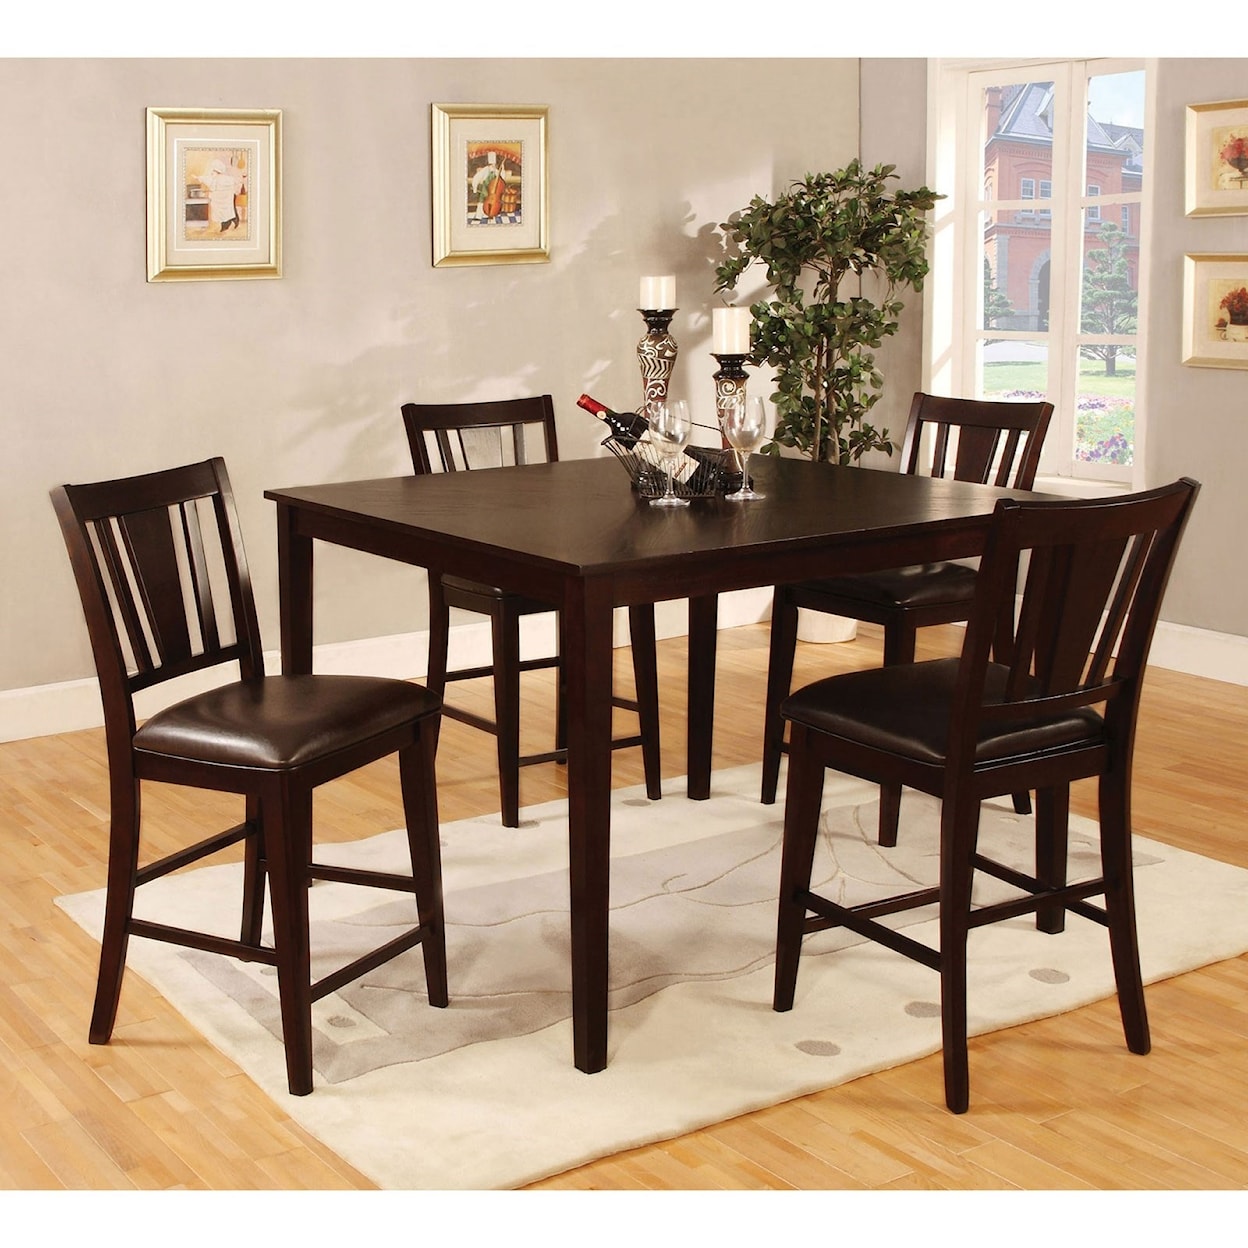 Furniture of America Bridgette II 5 Pc Counter Height Table Set